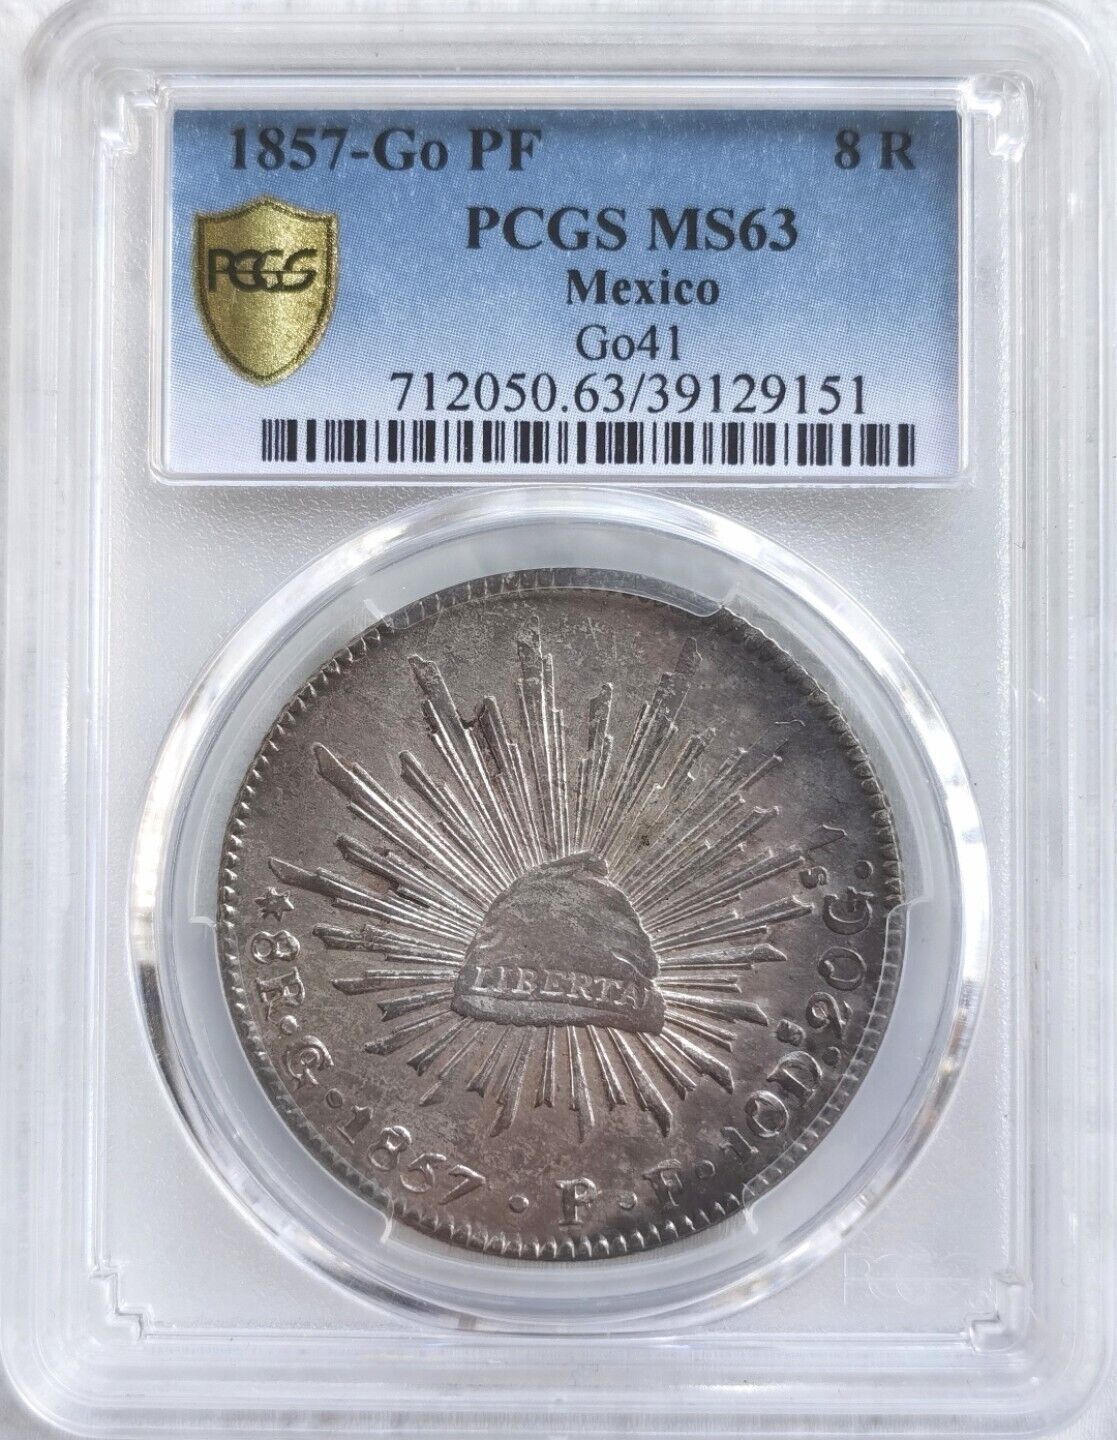 Pcgs Ms63 Mexico 1857-go Pf Silver Coin 8 Reales Mexico